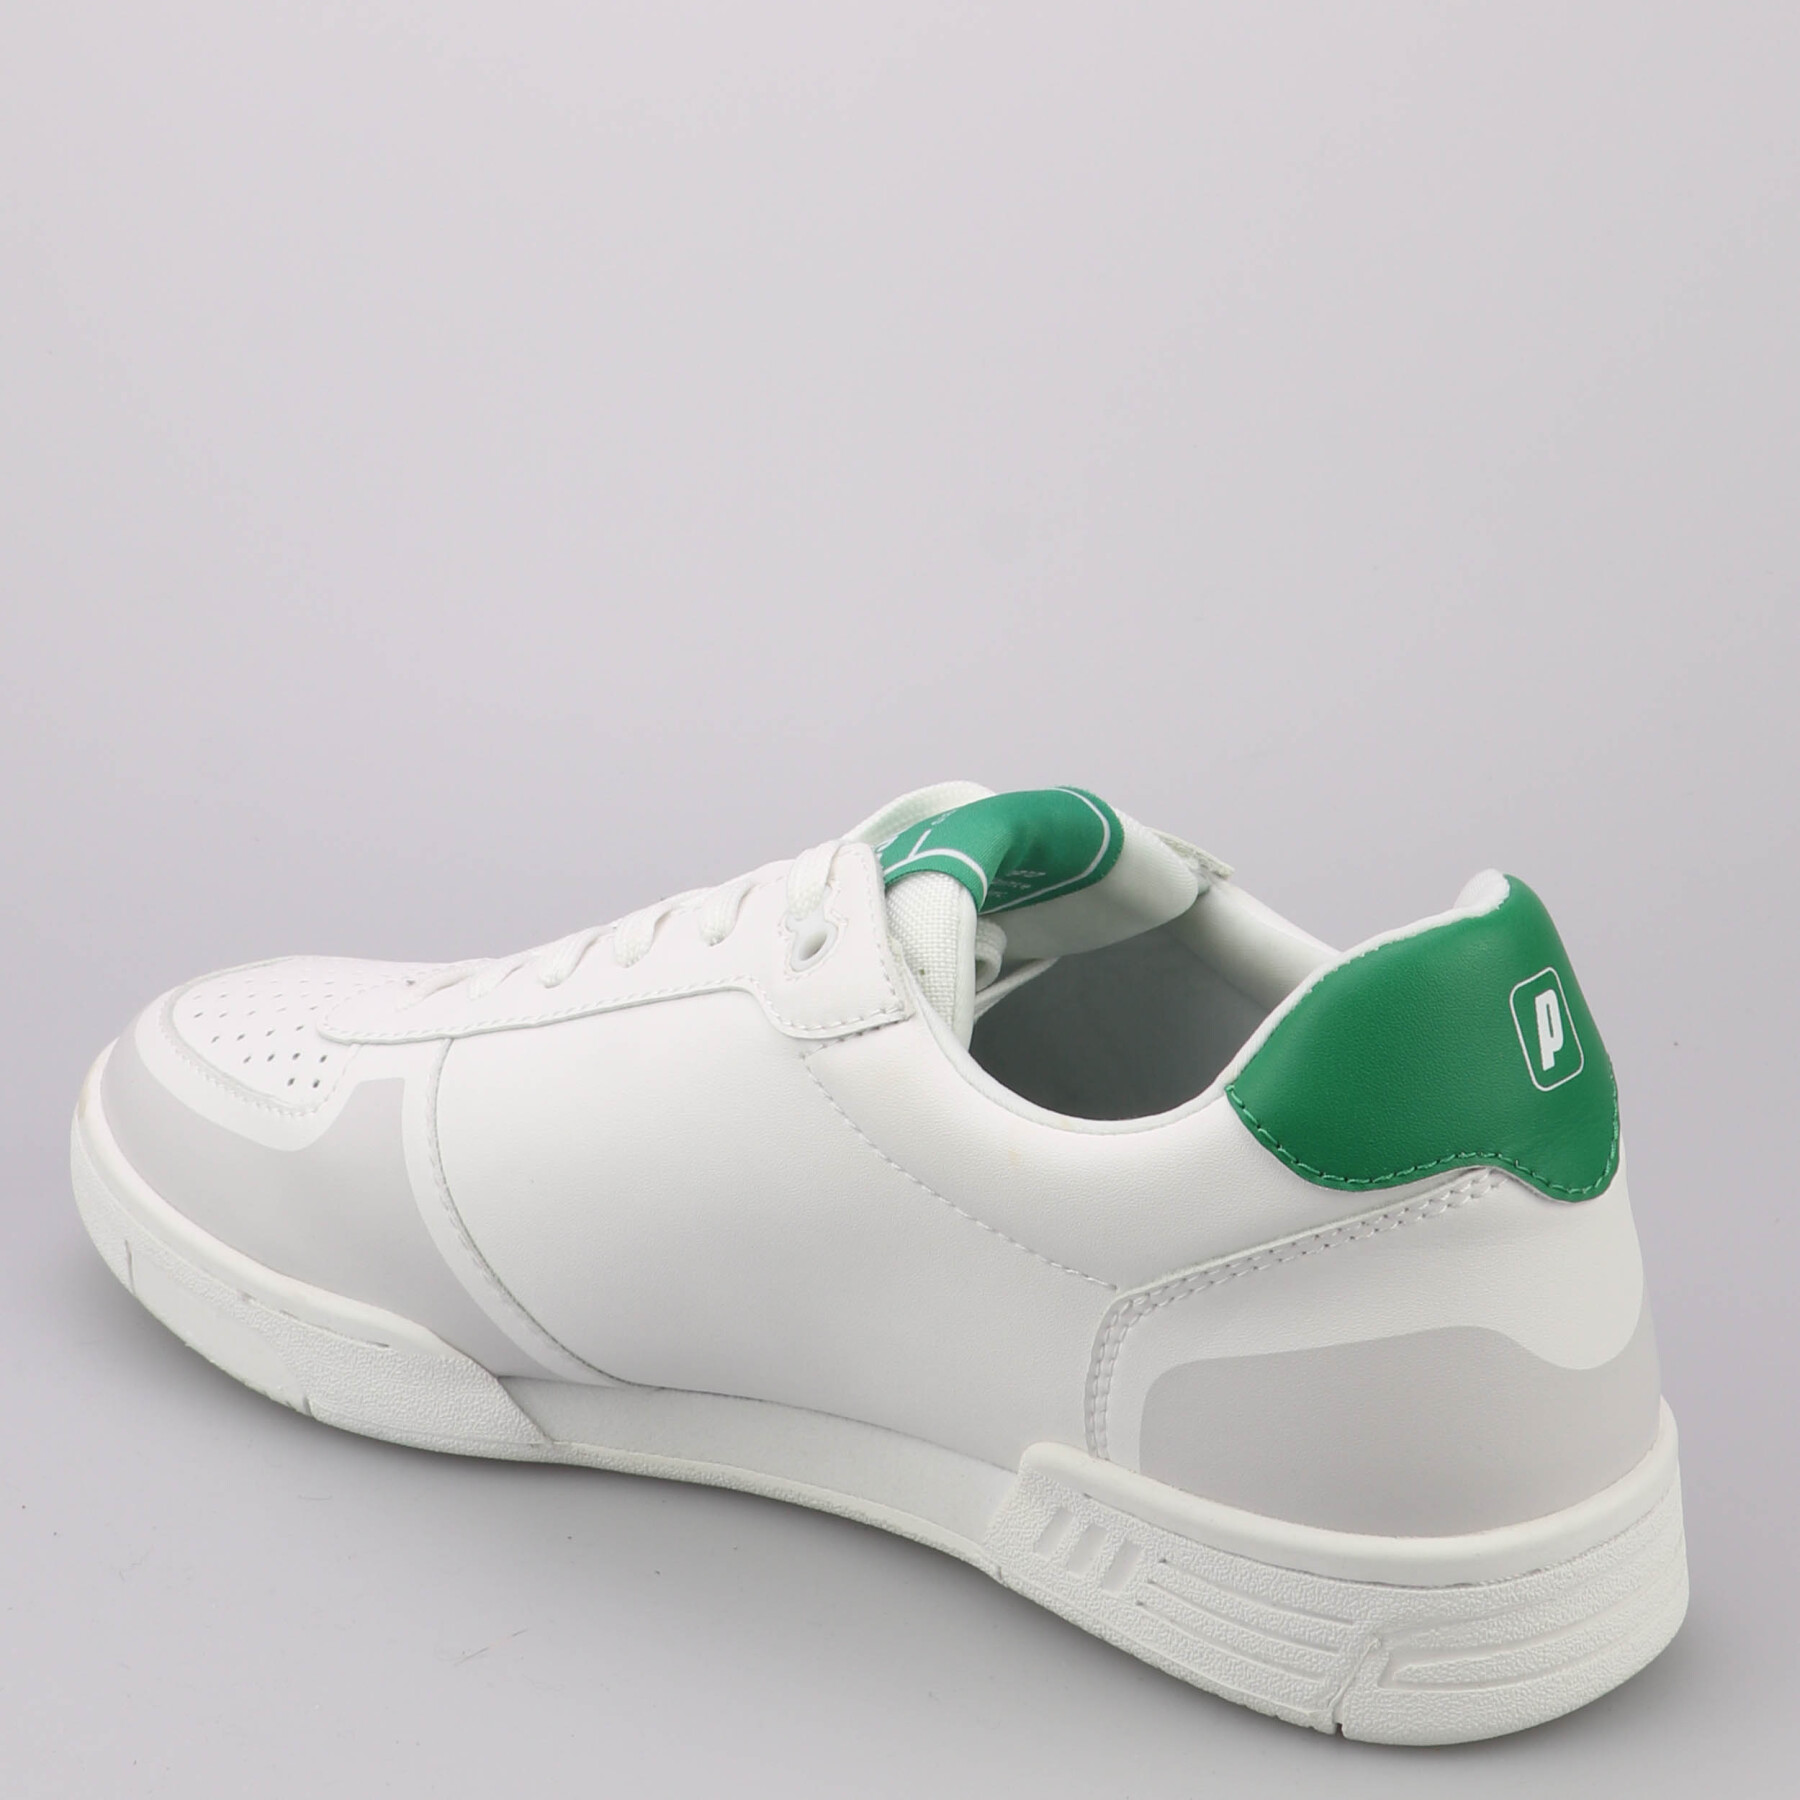 Tennis shoes Prince FST 623